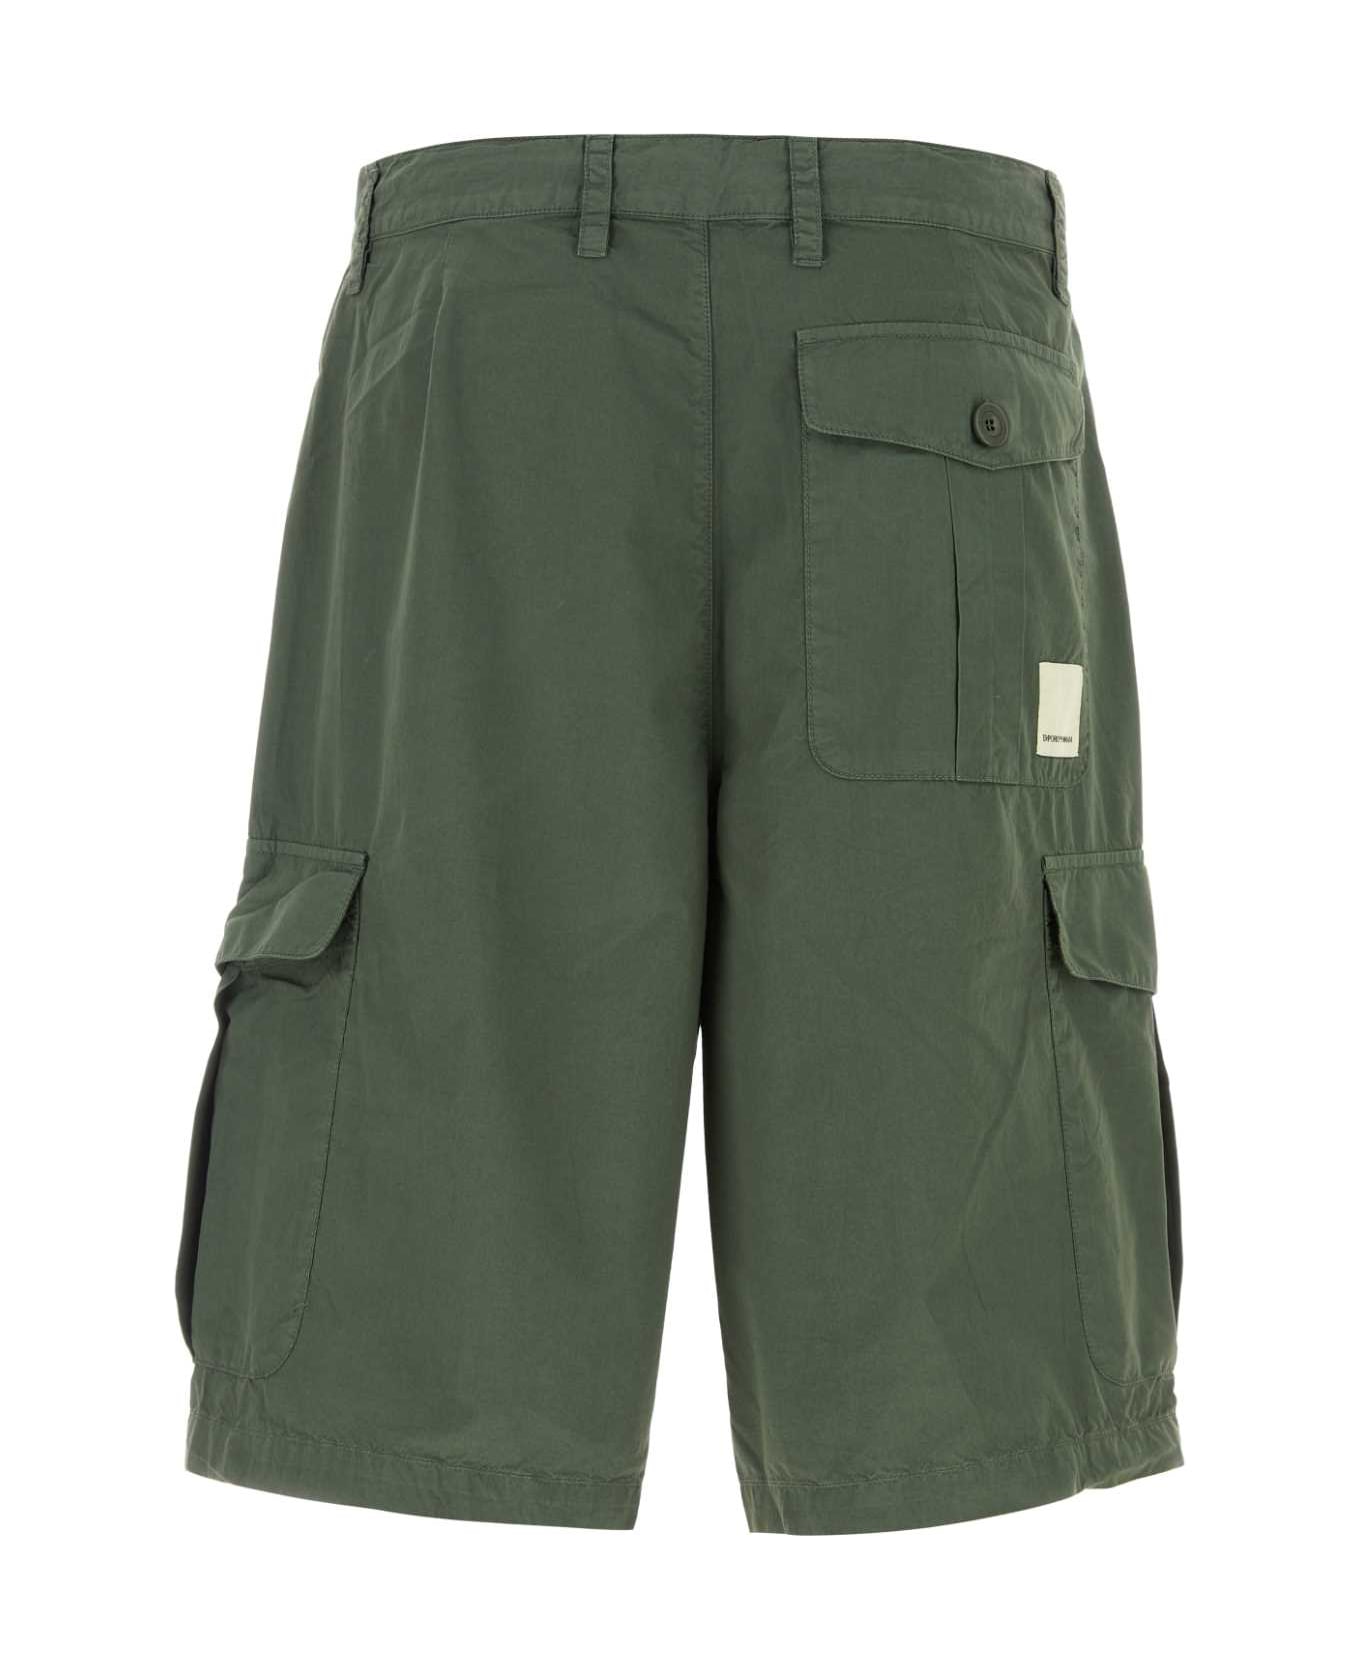 Emporio Armani Dark Green Cotton Bermuda Shorts - 05C1